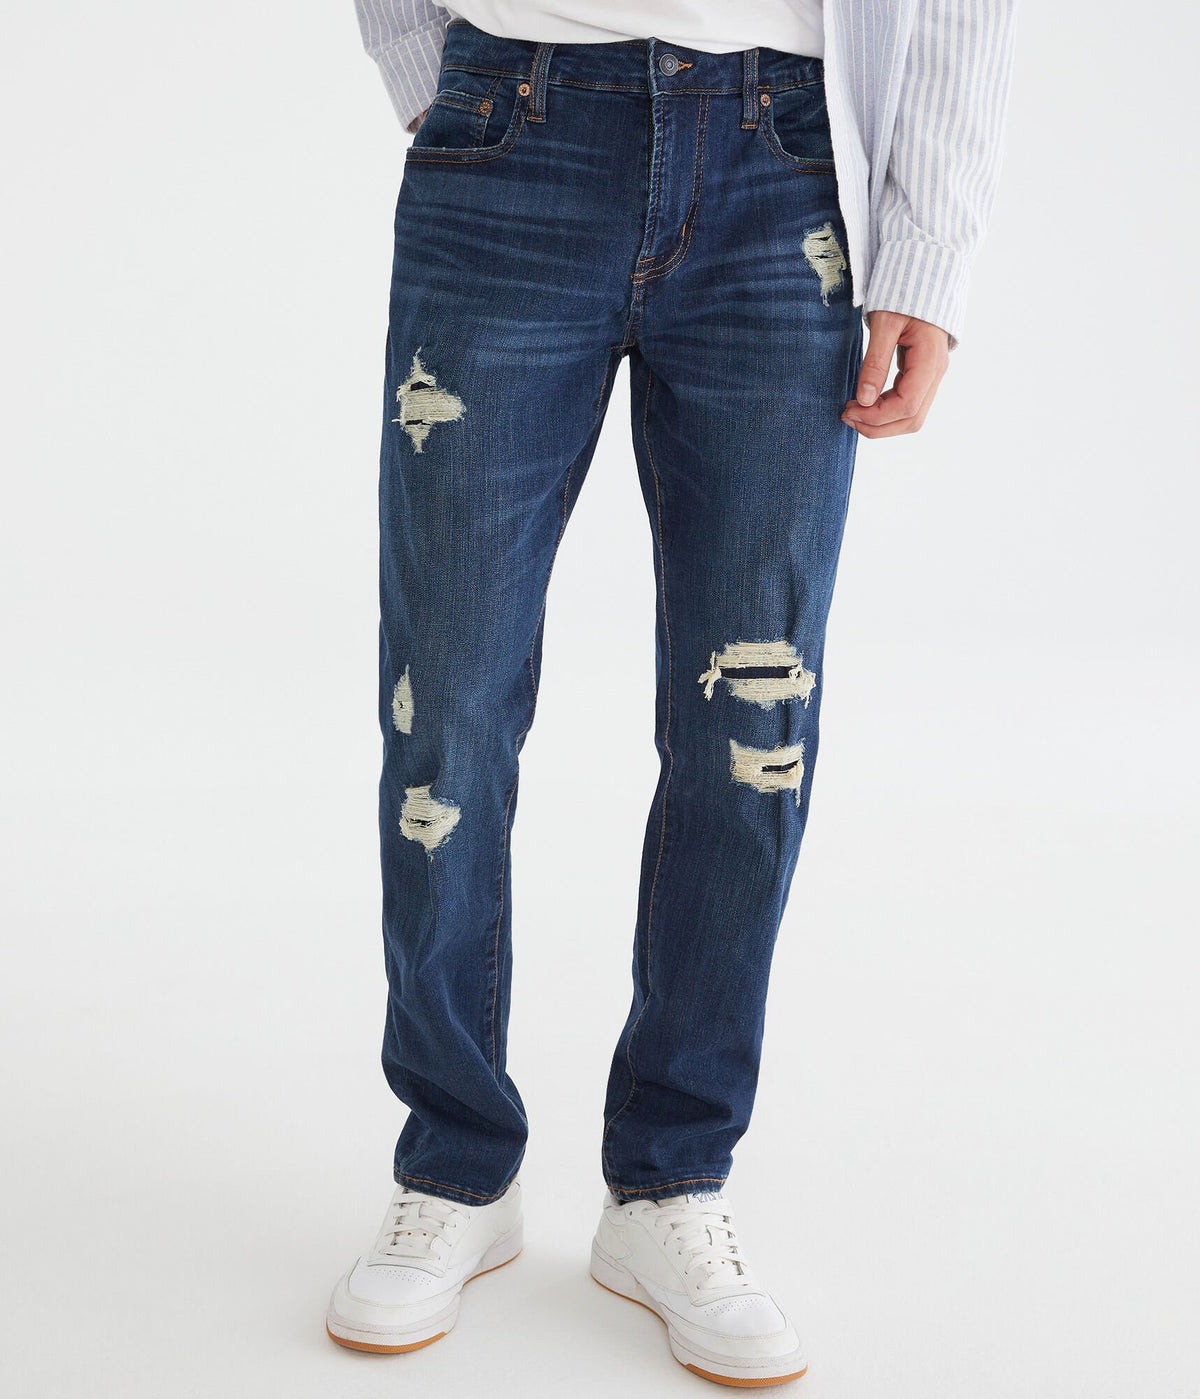 Aeropostale Mens' Slim Premium Jean with LYCRA FREEF!T Technology - Blue - Size 32X34 - Cotton - Teen Fashion & Clothing Dark Wash